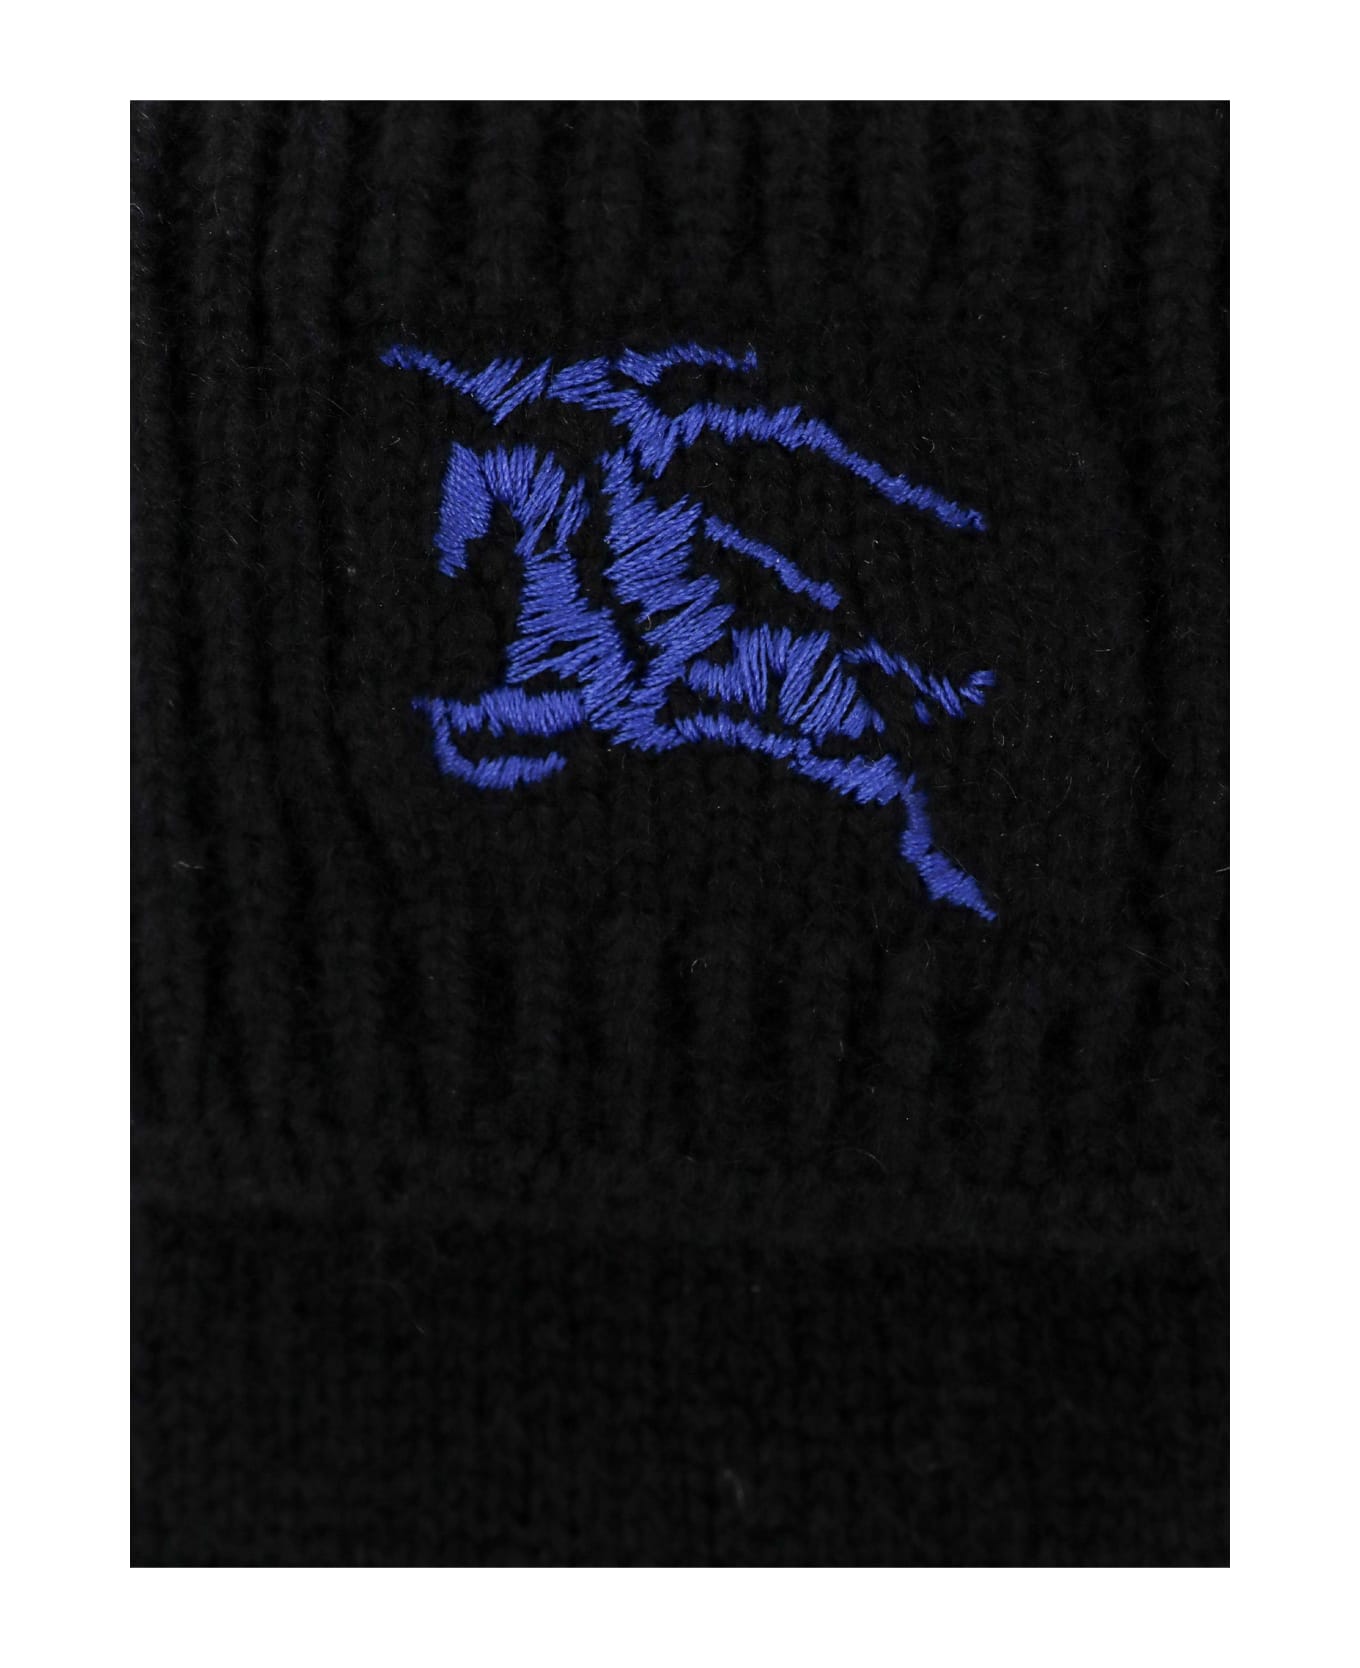 Burberry Cashmere Blend Gloves - Black 手袋